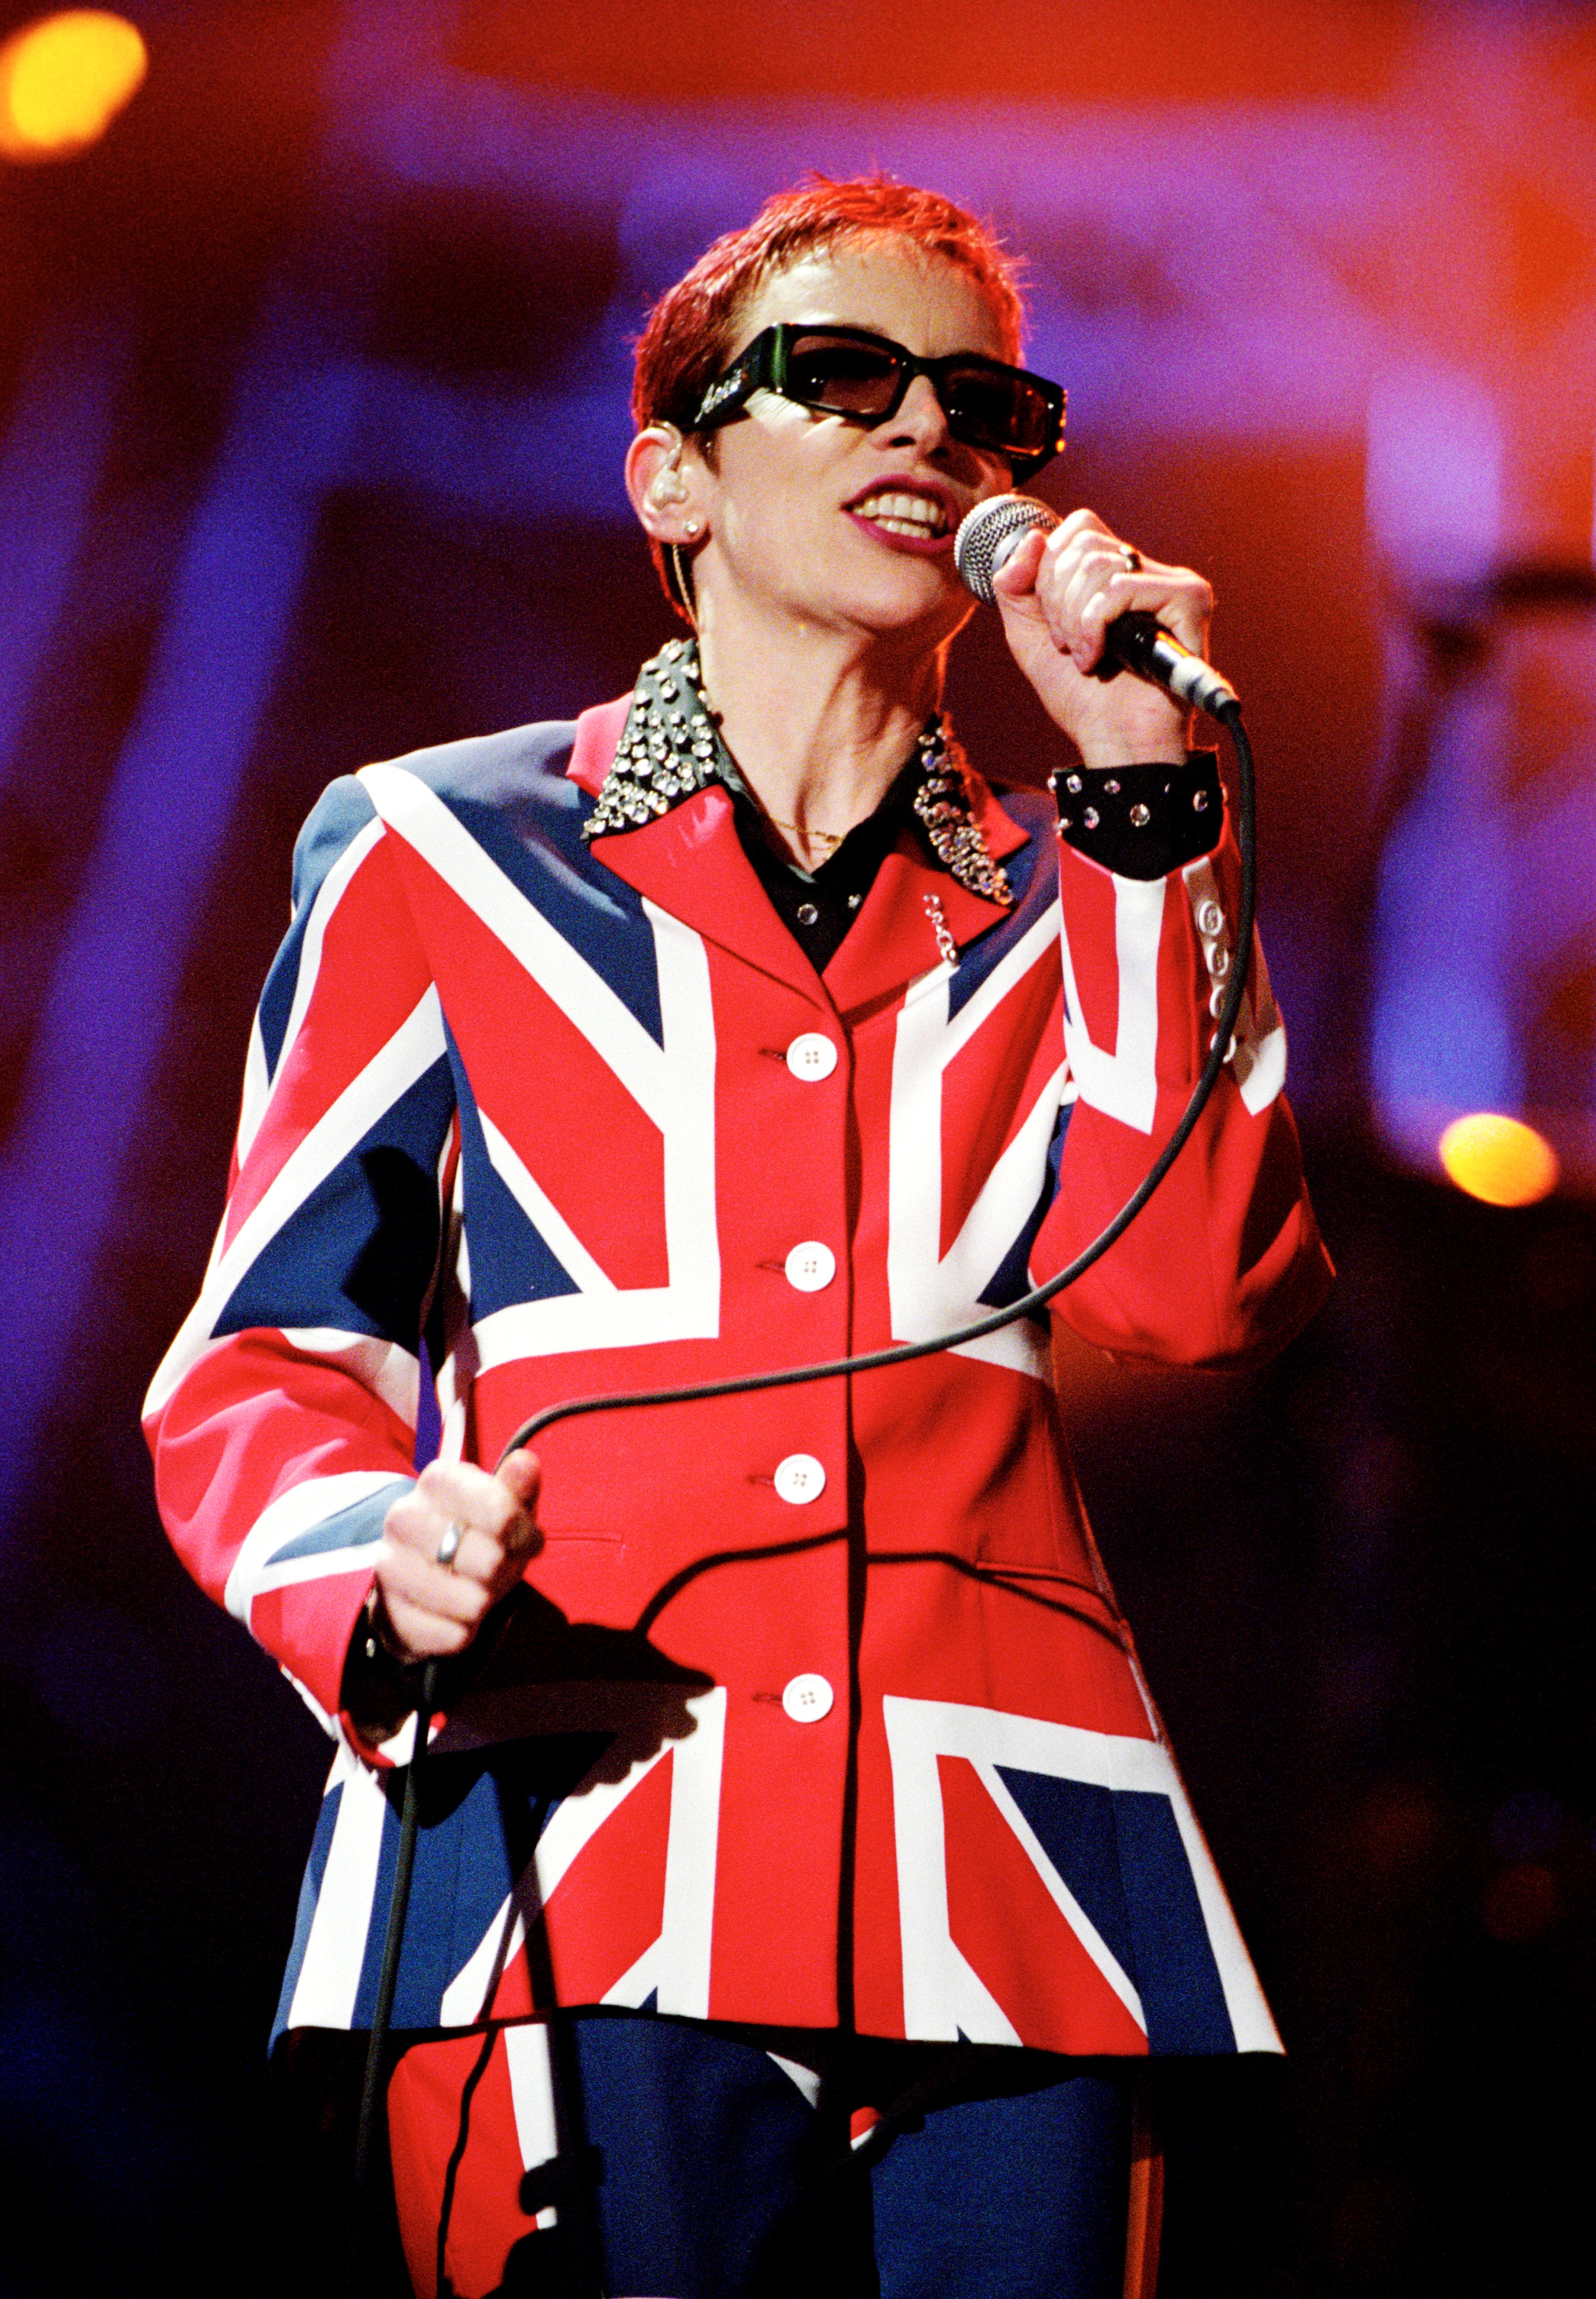 Annie Lennox at the 1999 Brit Awards